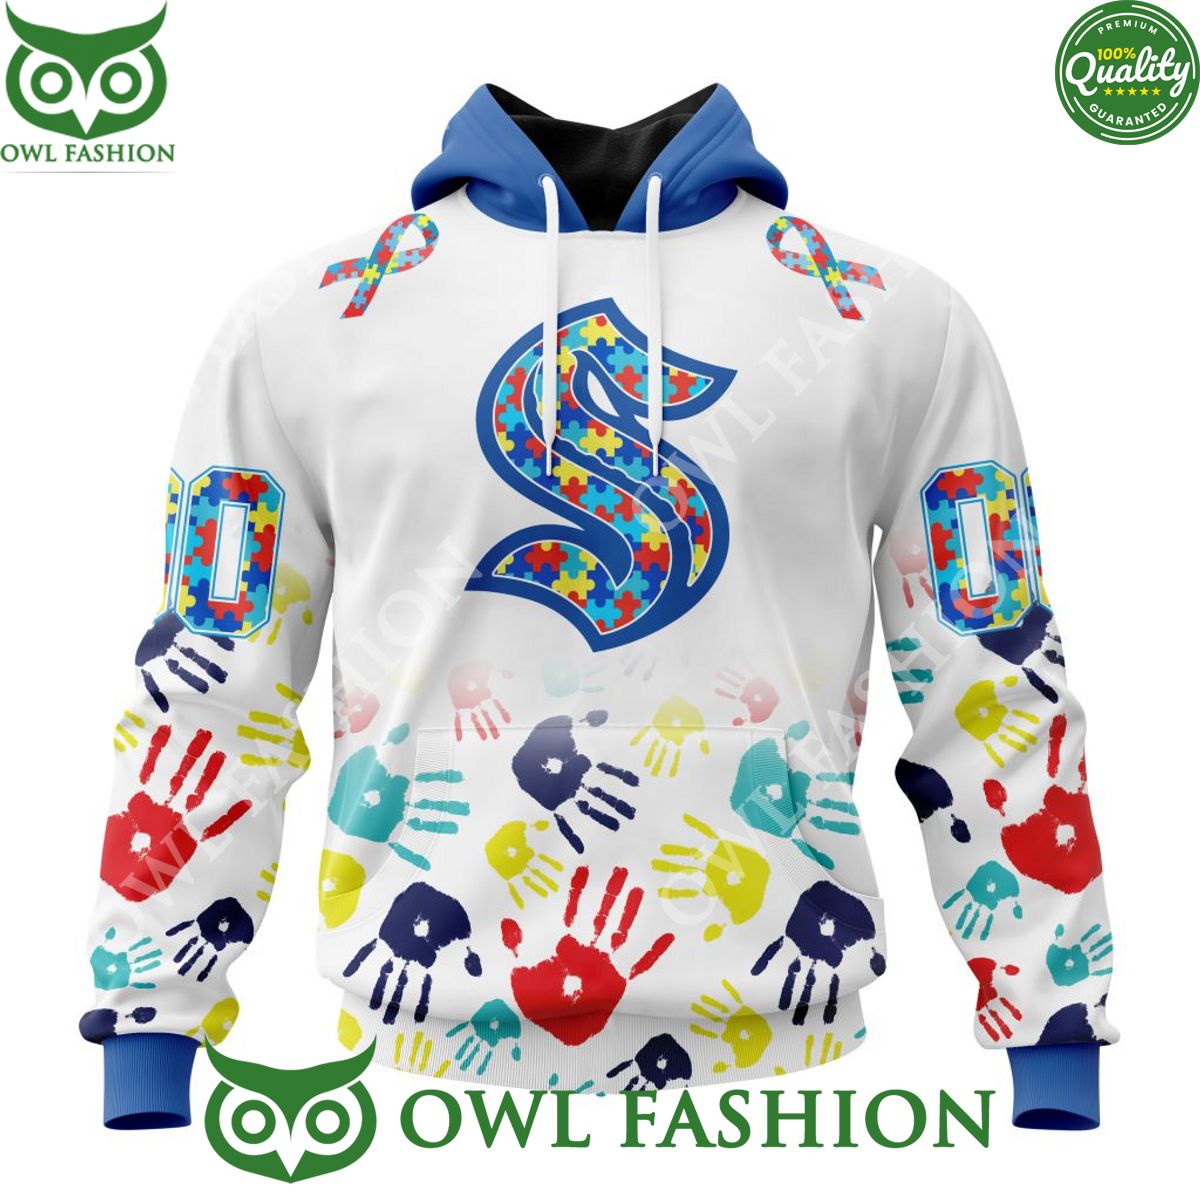 nhl seattle kraken special autism awareness design personalized hoodie shirt 1 M6Jnh.jpg